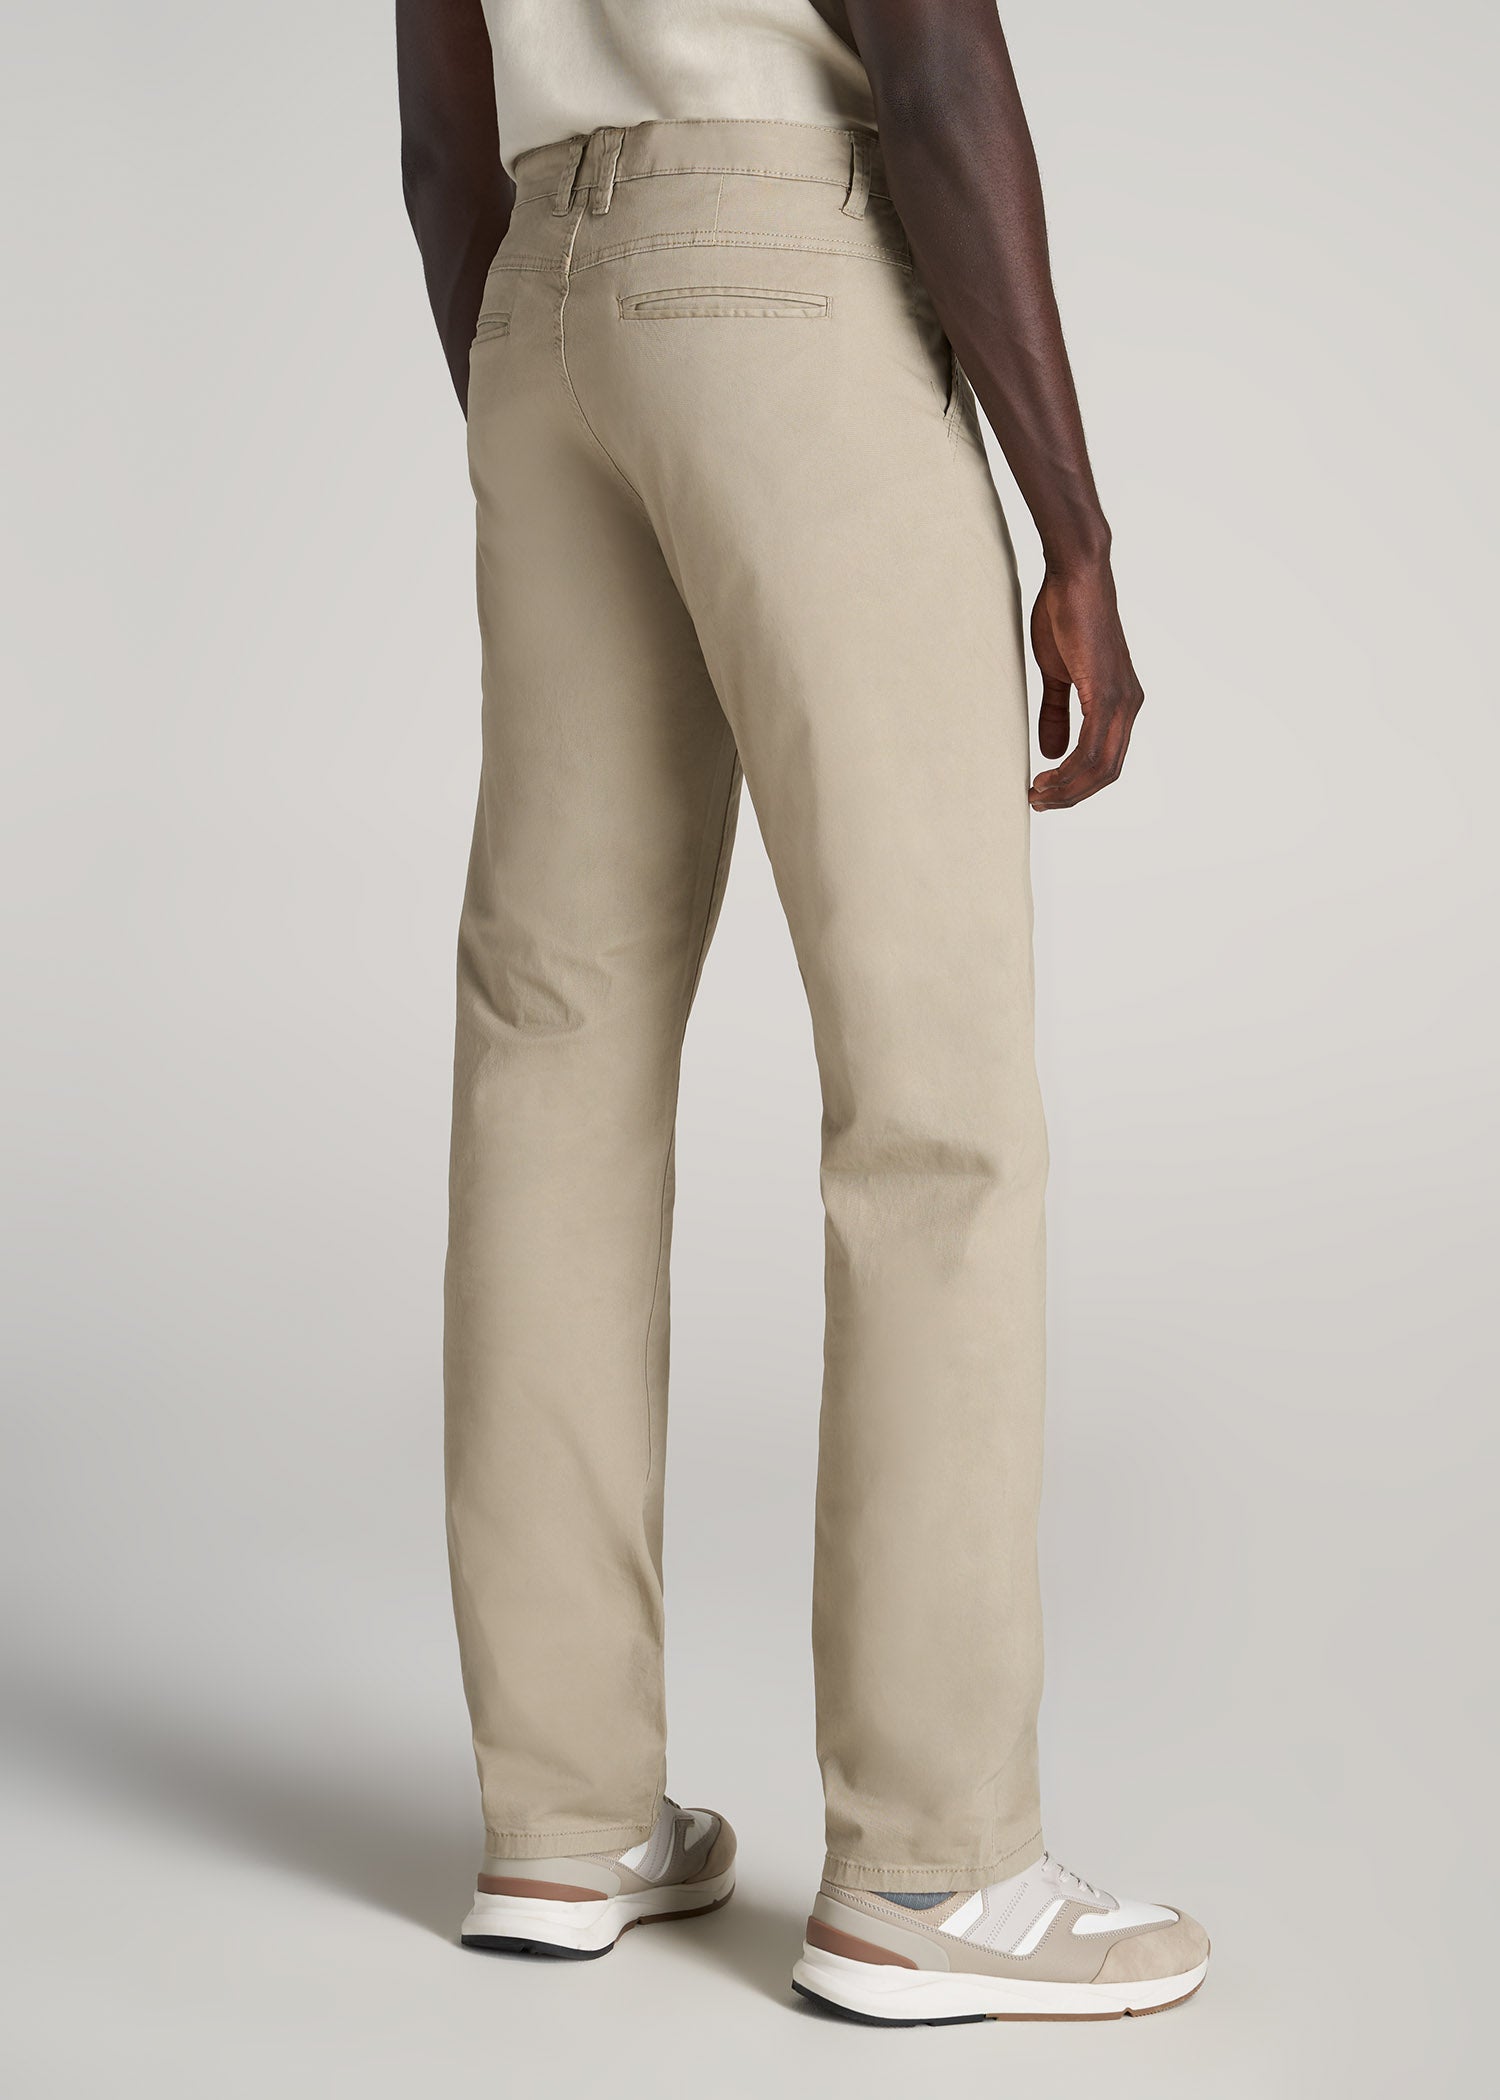 Adapture Relaxed Fit Chino Pants - Demitasse | Garmentory